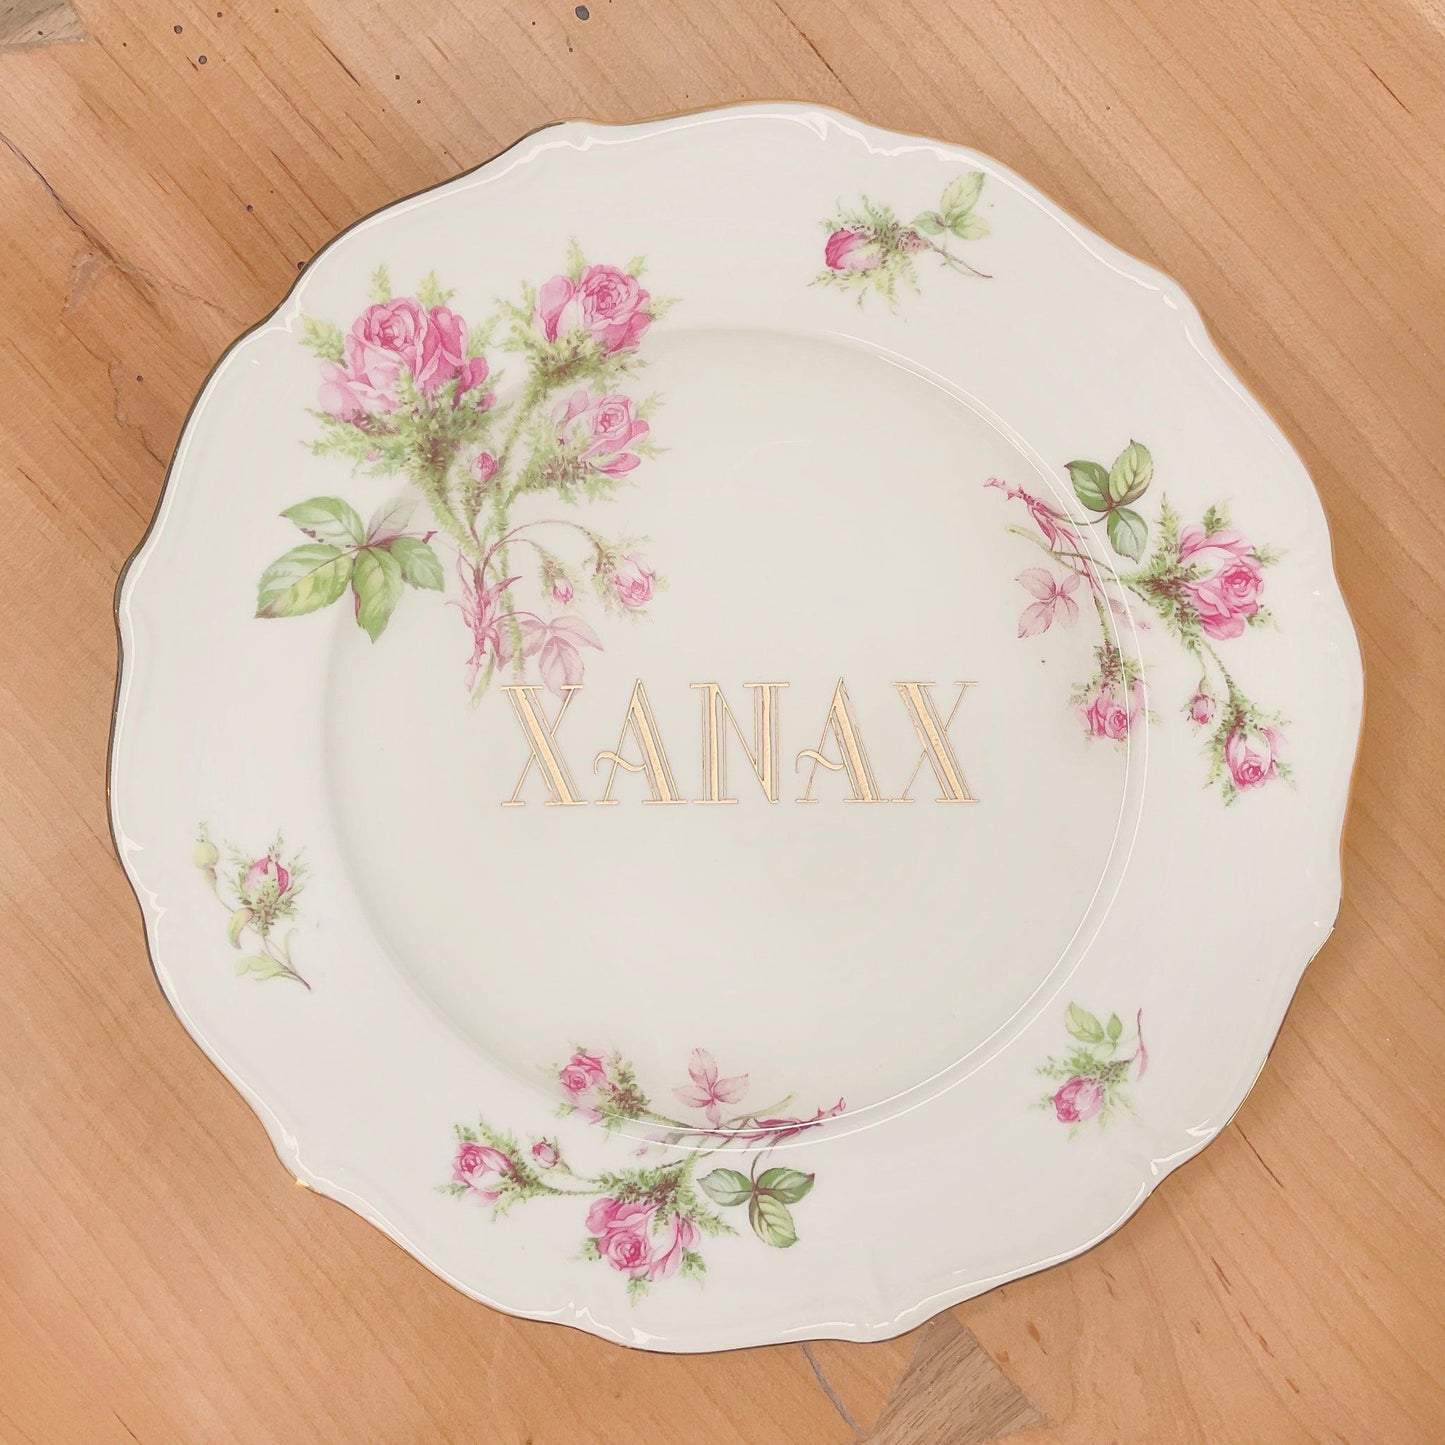 Xanax Dessert Plate - Offensively Domestic